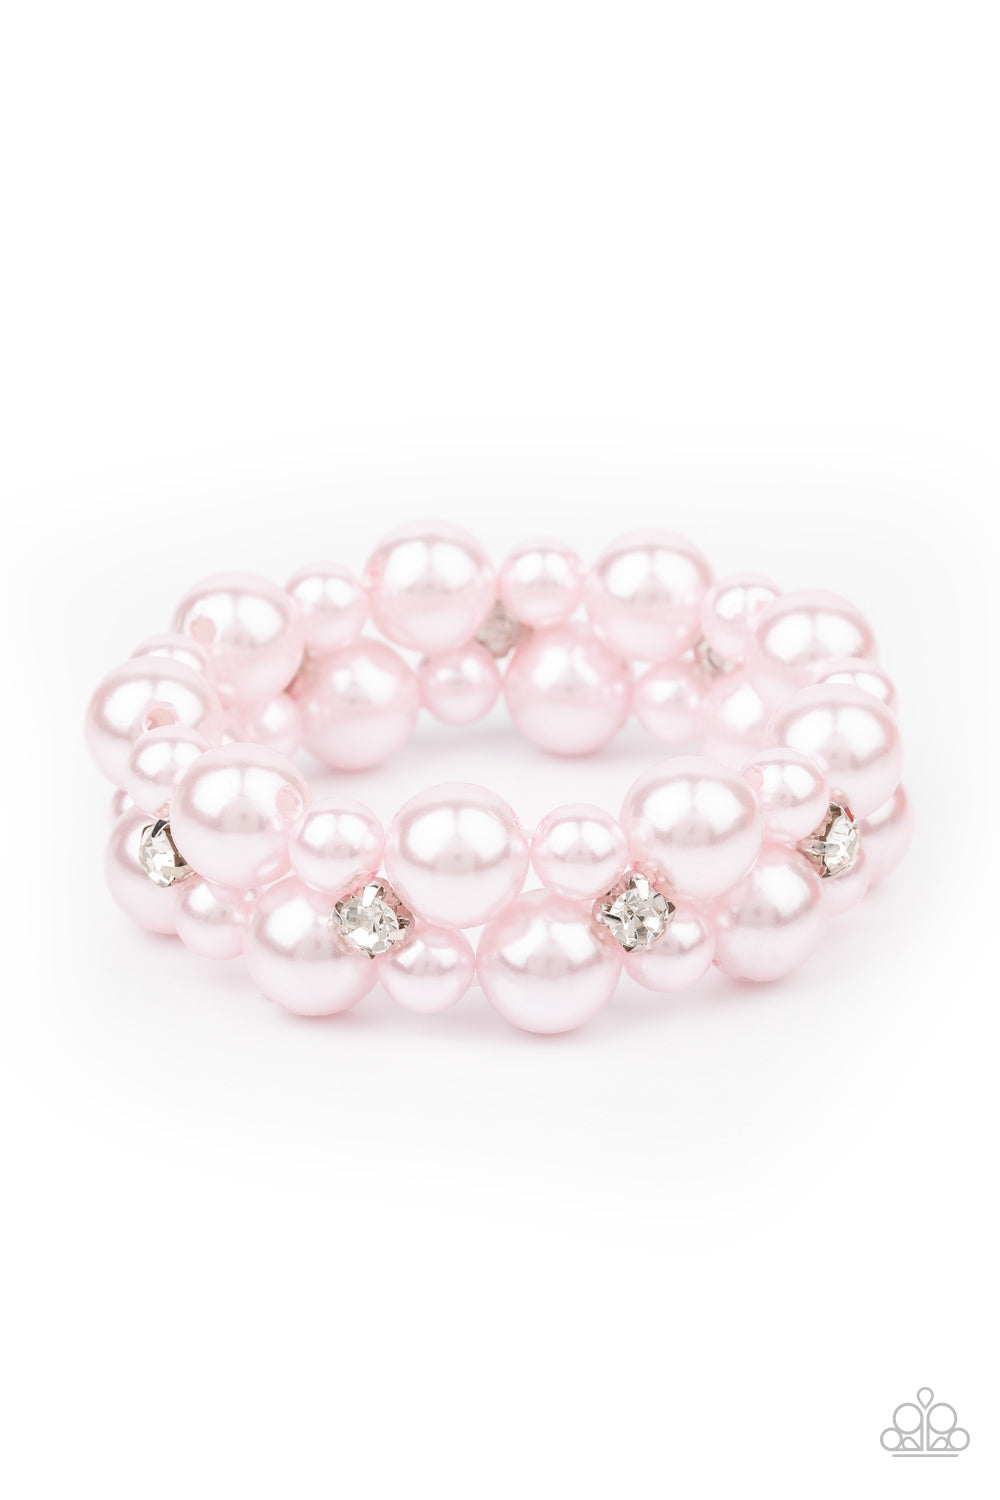 Paparazzi Flirt Alert - Pink Bracelet - A Finishing Touch Jewelry